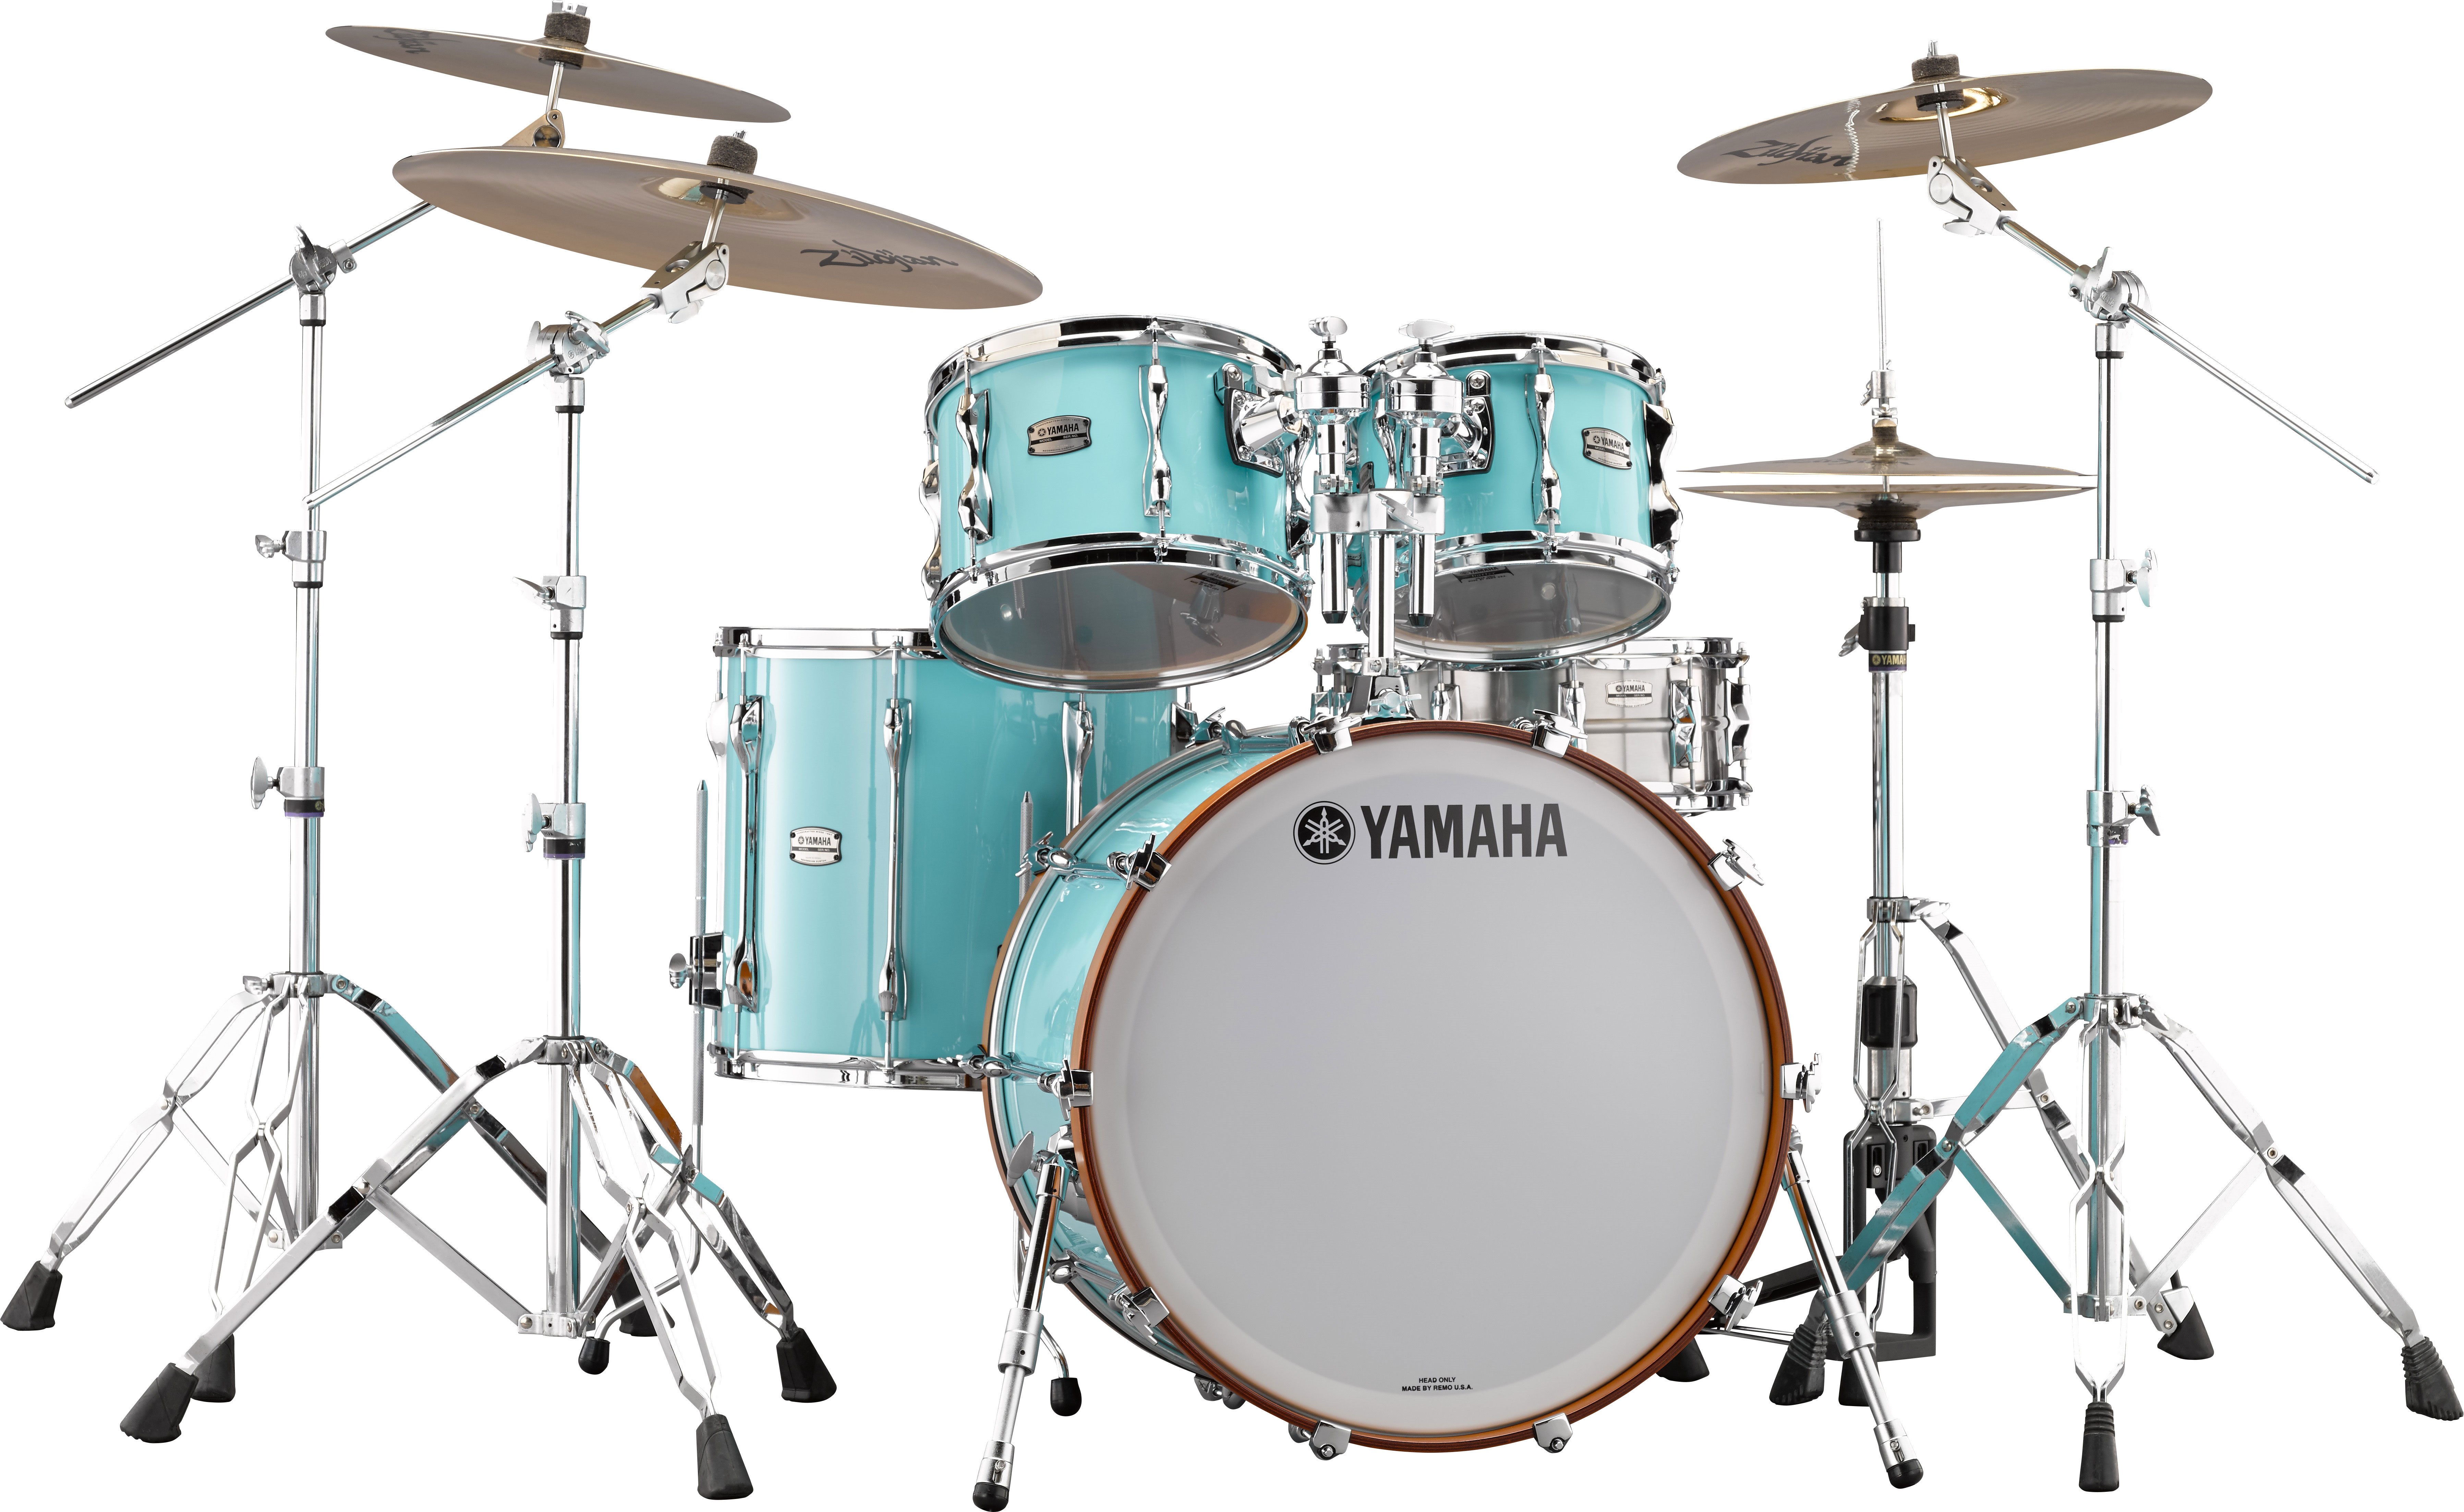 types of drums in a drum set